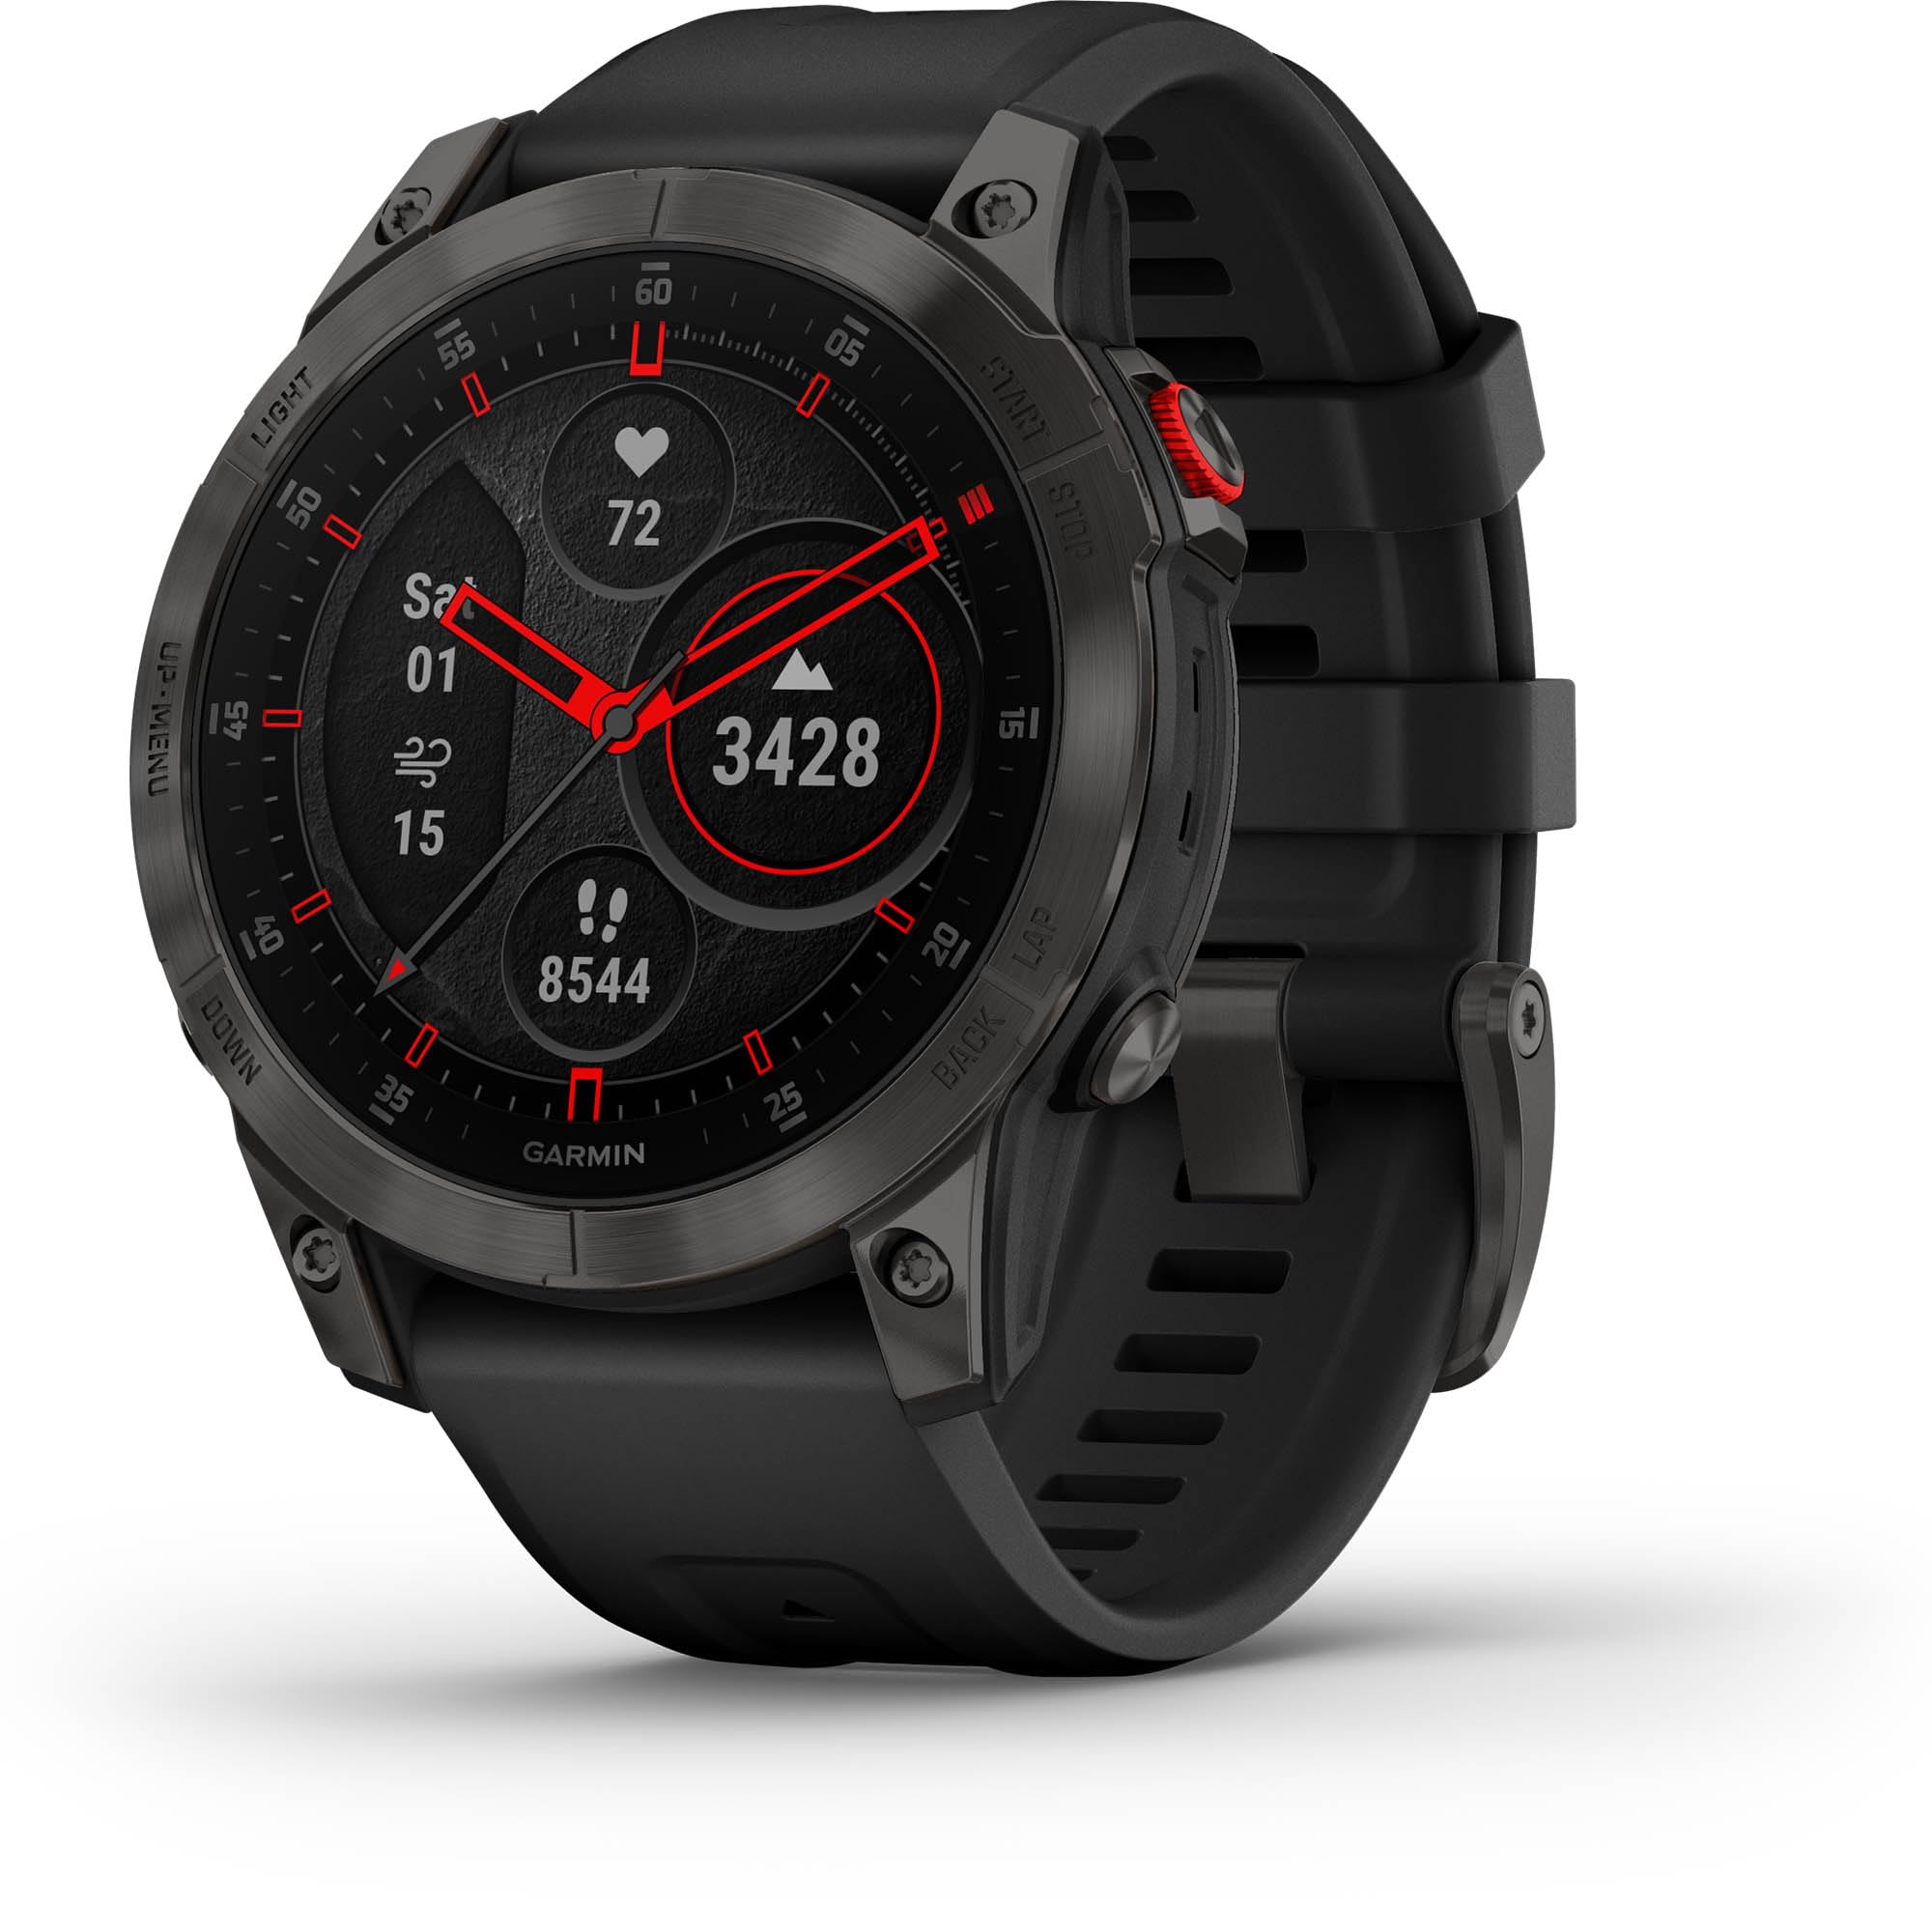 Garmin 010-02582-10 epix Gen 2, Premium active smartwatch, Health and wellness features, touchscreen AMOLED display, adventure watch with advanced features, black titanium